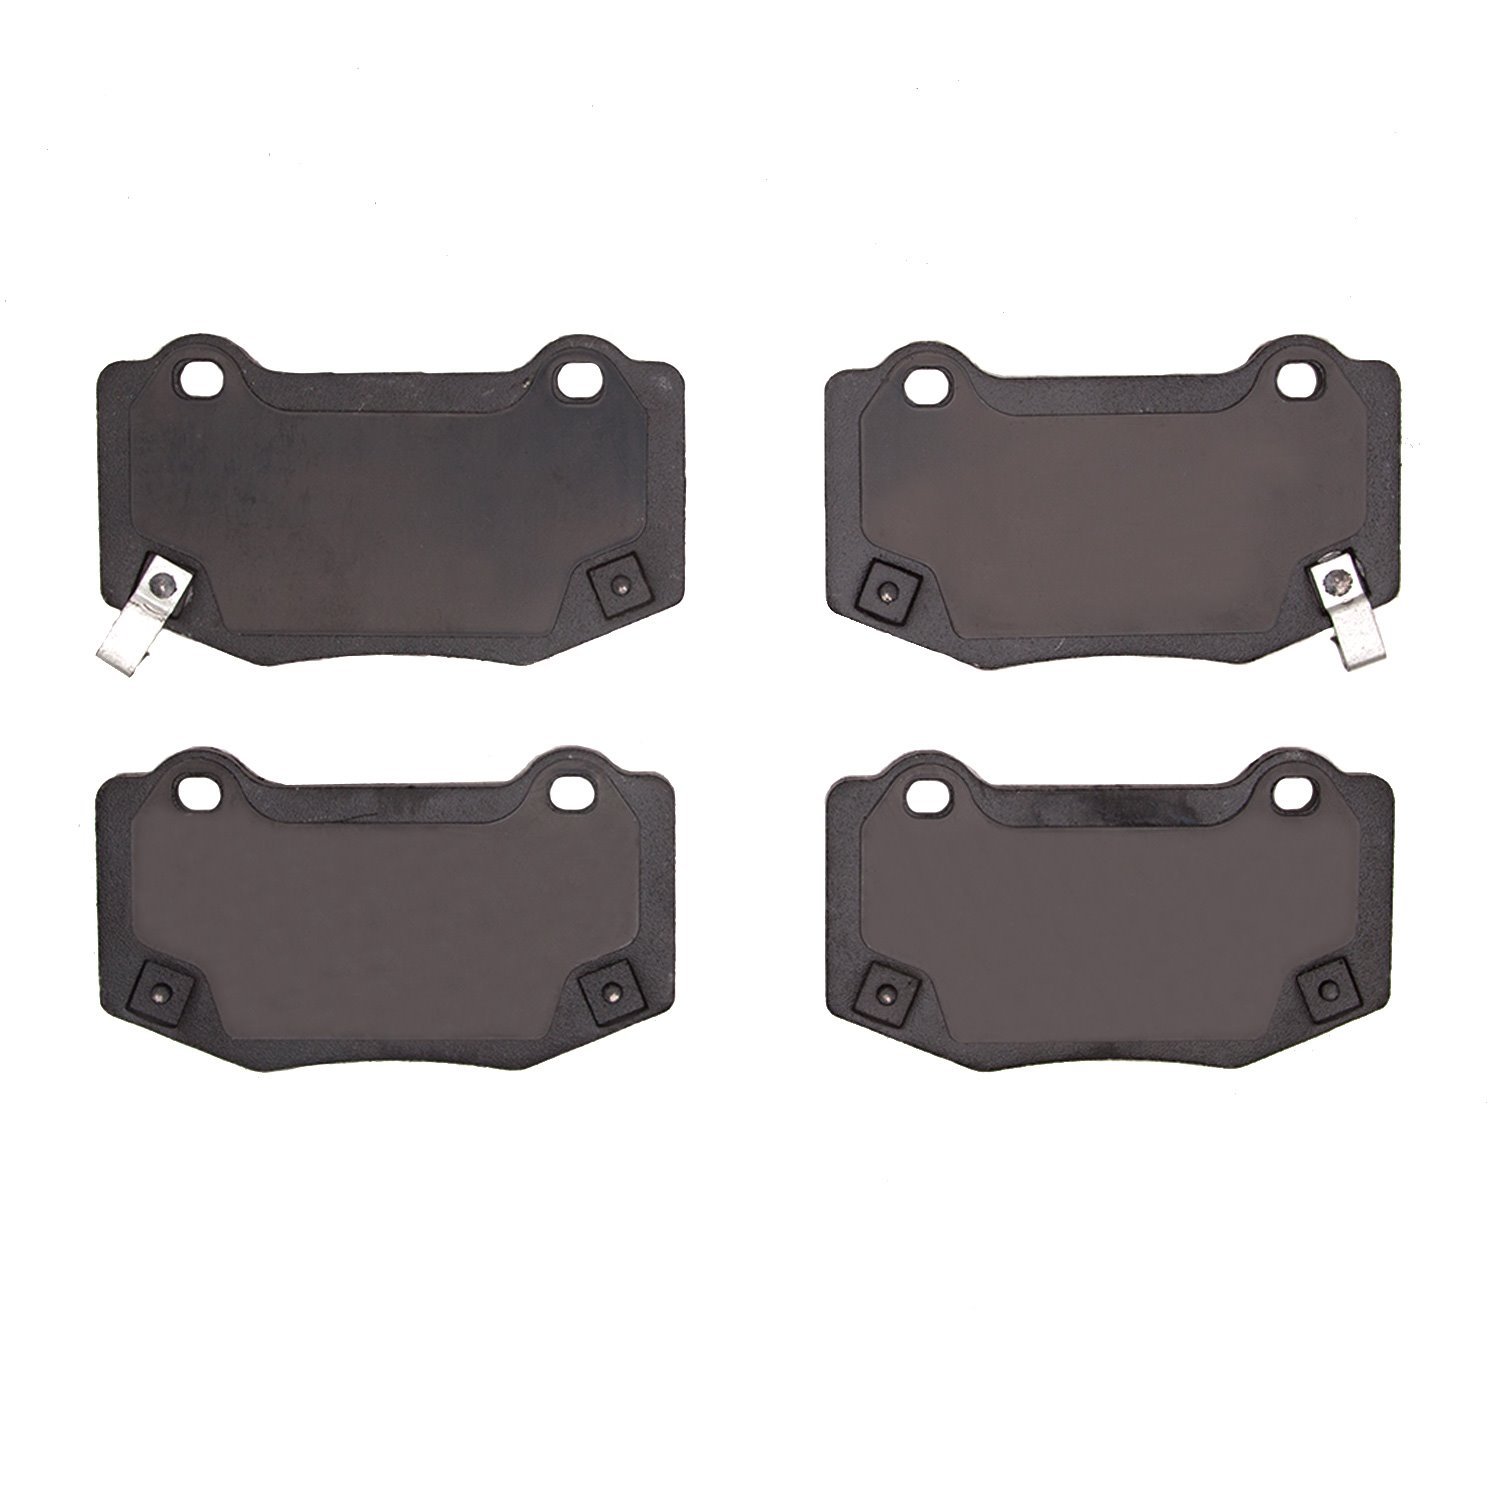 1552-1718-00 5000 Advanced Low-Metallic Brake Pads, Fits Select GM, Position: Rear